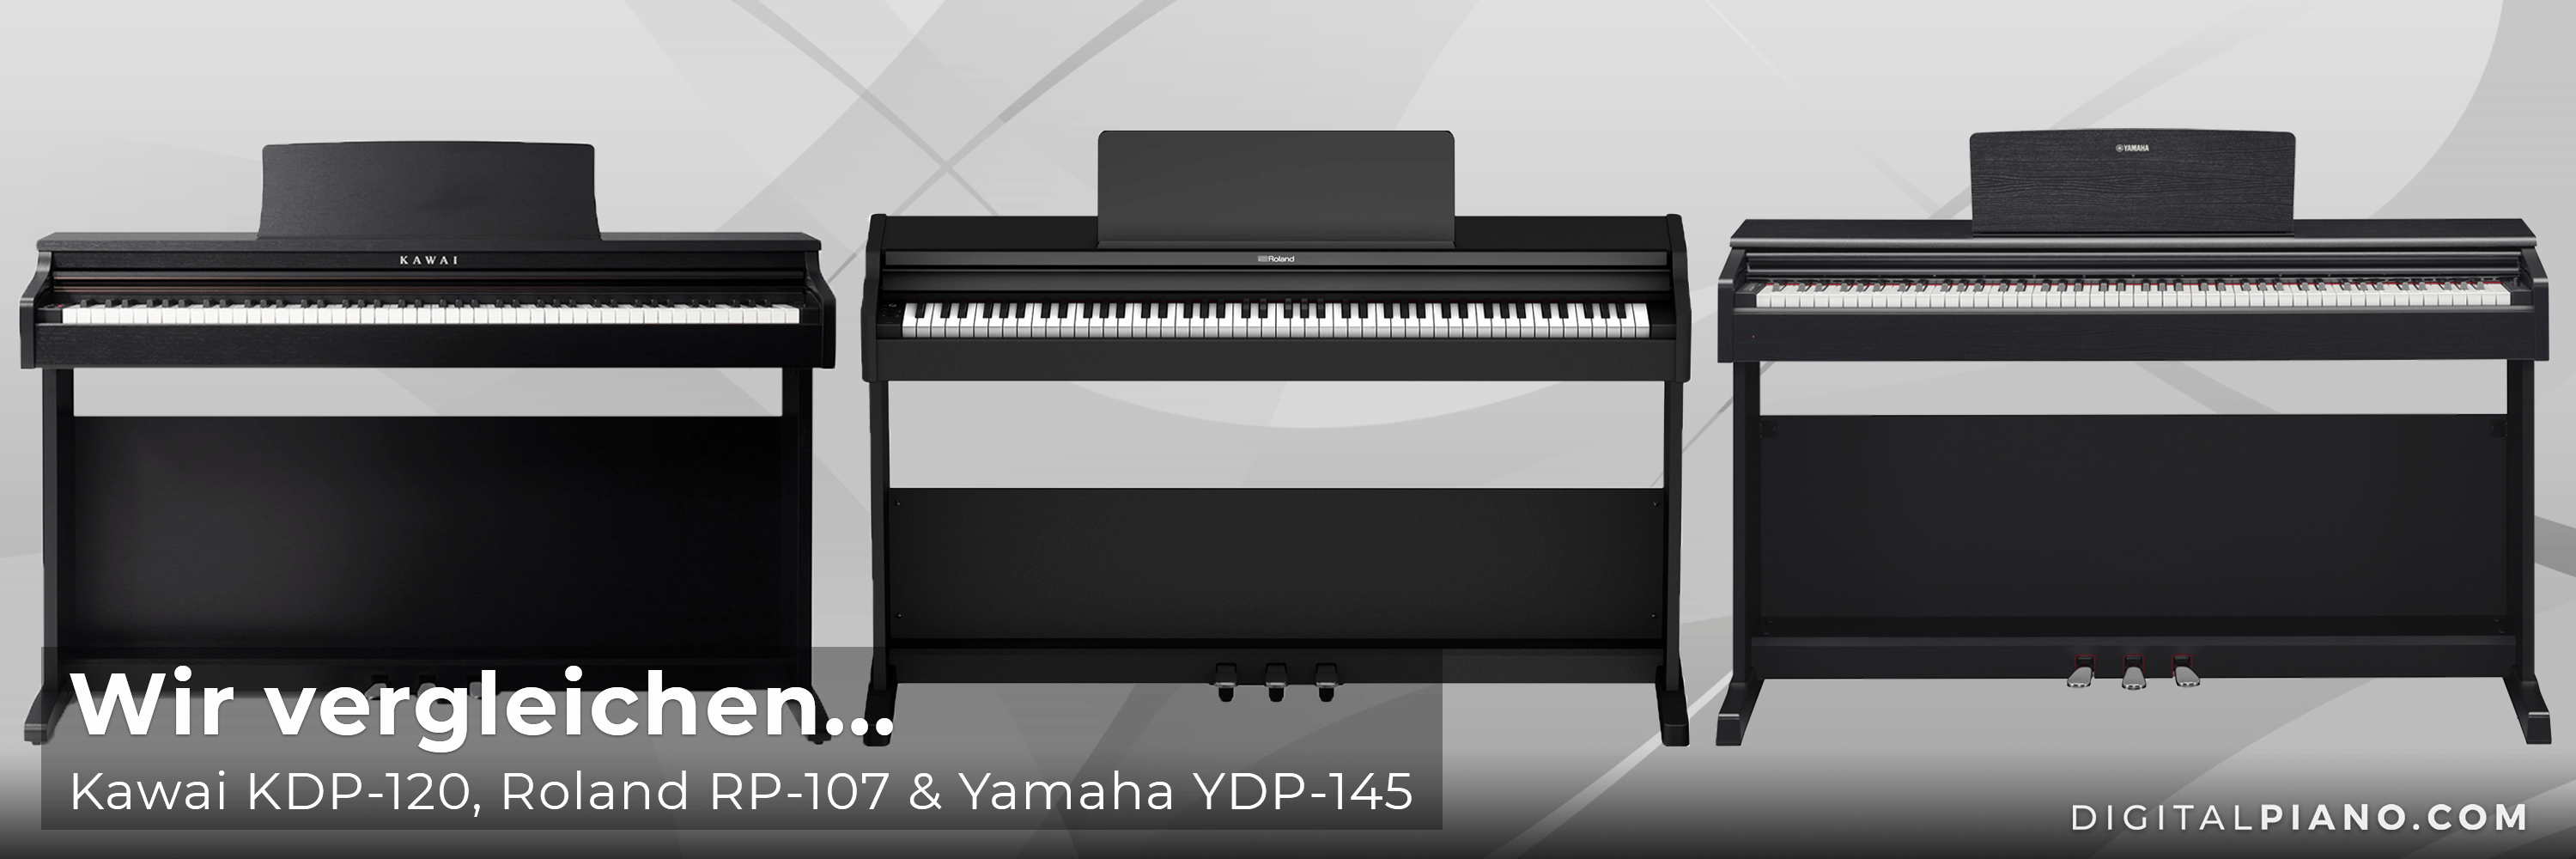 Wir vergleichen Kawai KDP-120, Roland RP-107 & Yamaha YDP-145